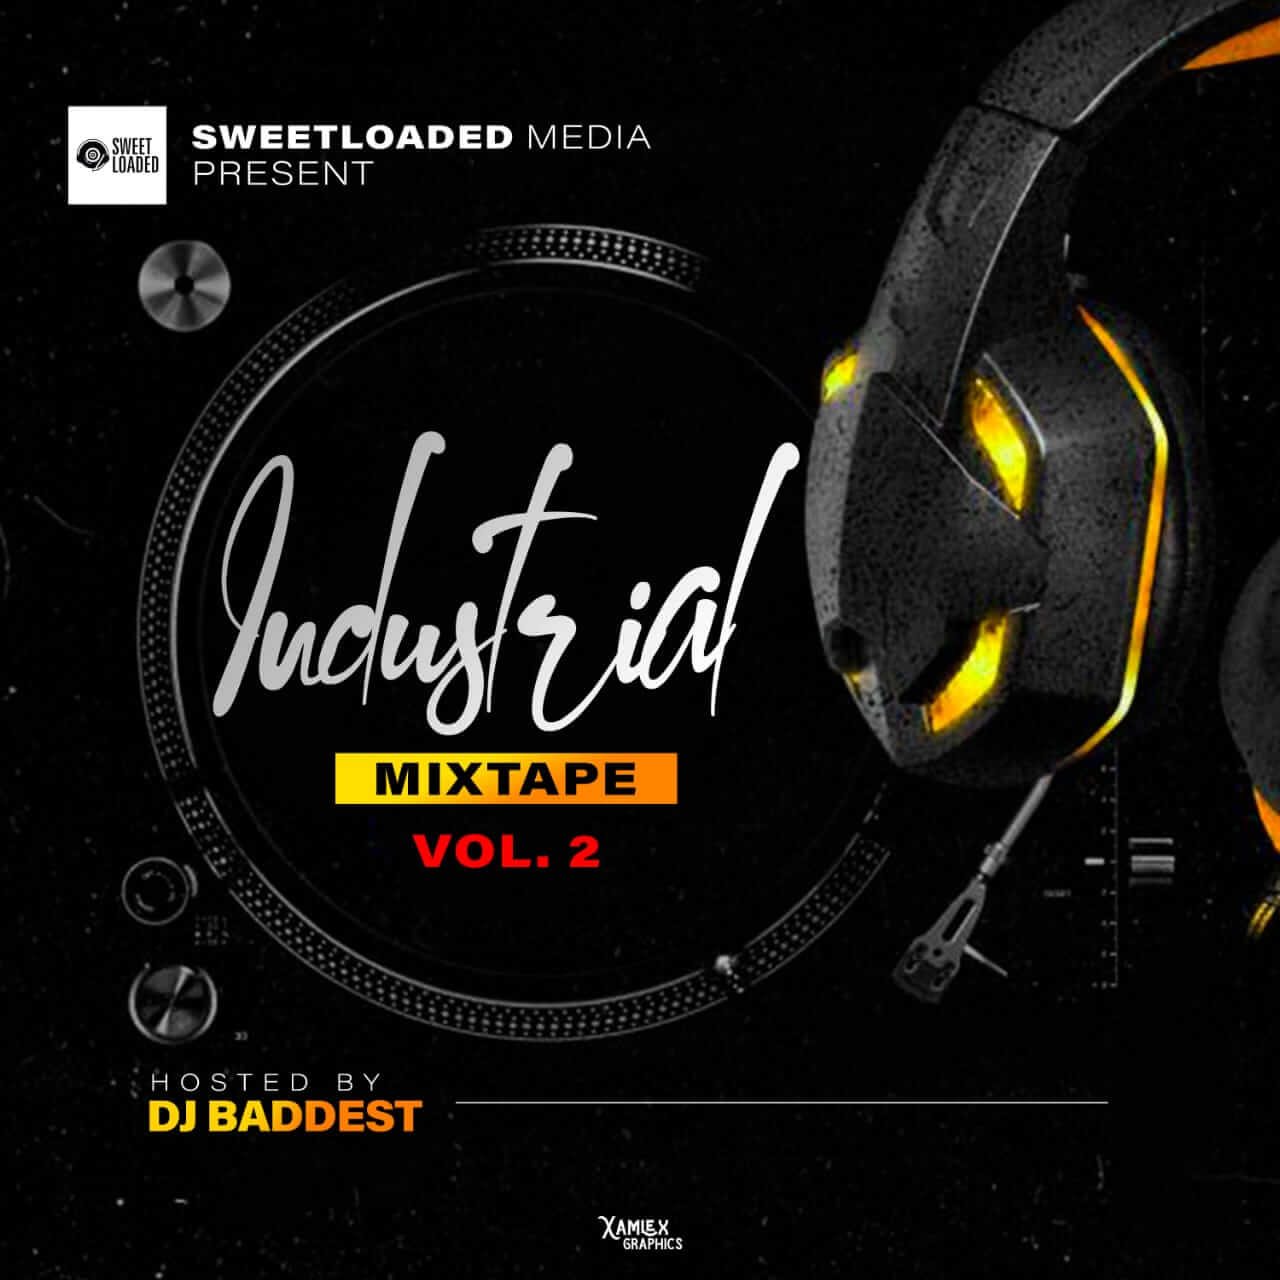 [Mixtape] Sweetloaded Ft DJ Baddest - Industrial Mix Volume. 2